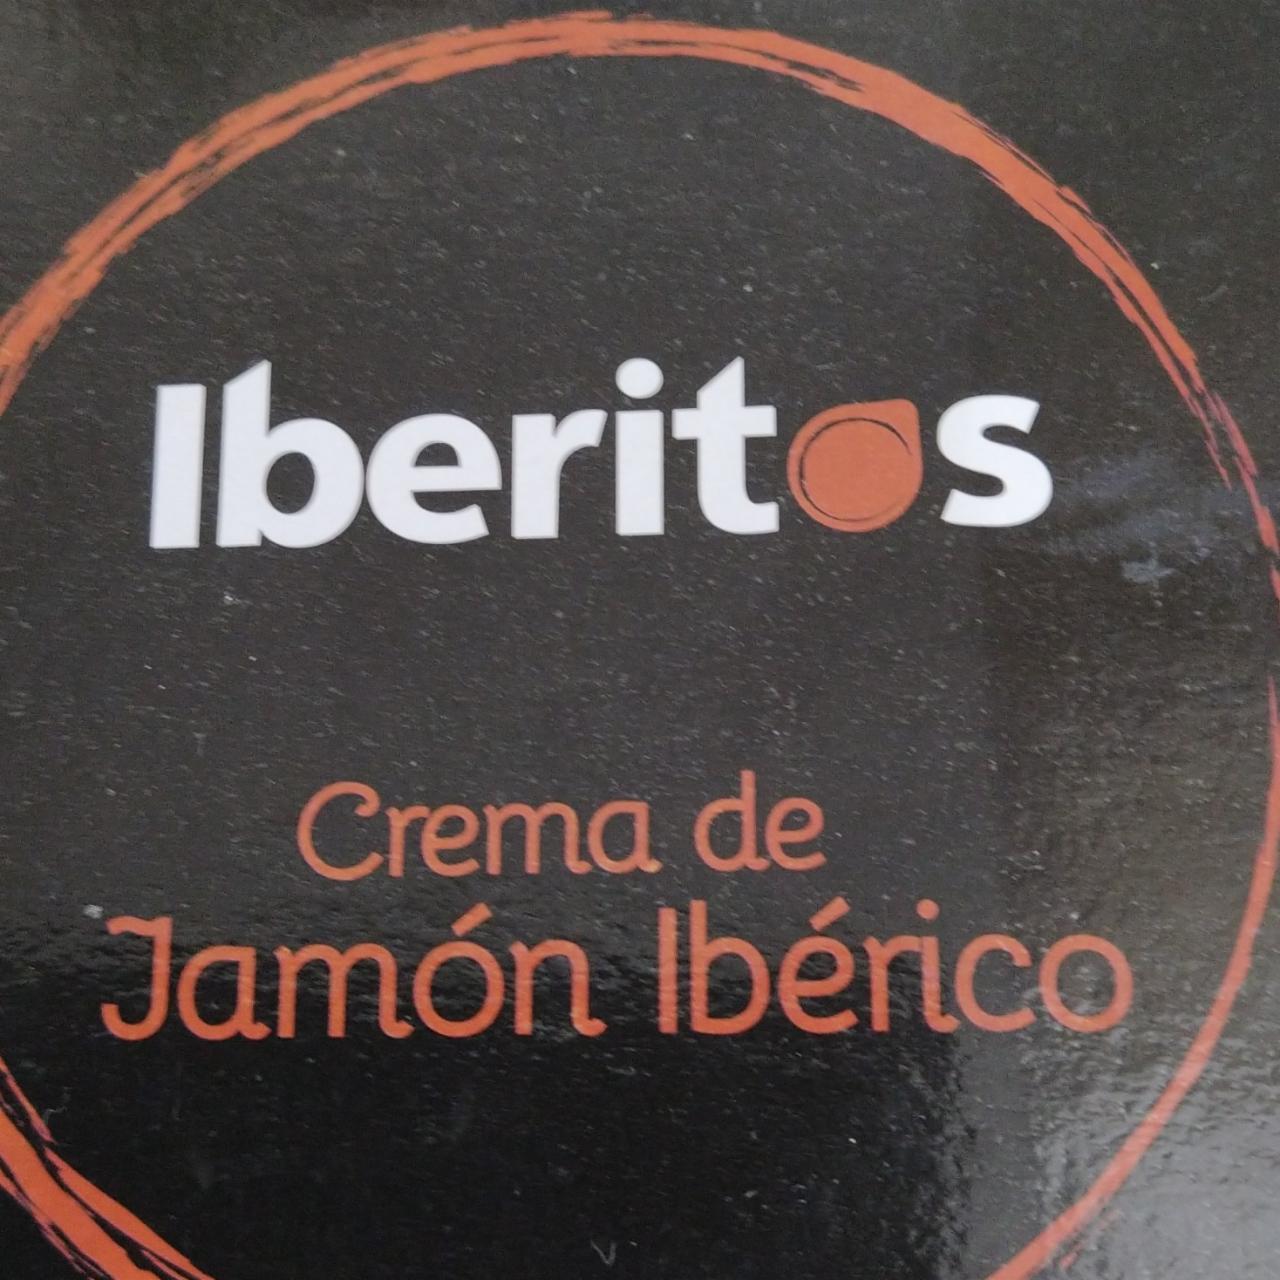 Fotografie - Crema de Jamón Ibérico Iberitos